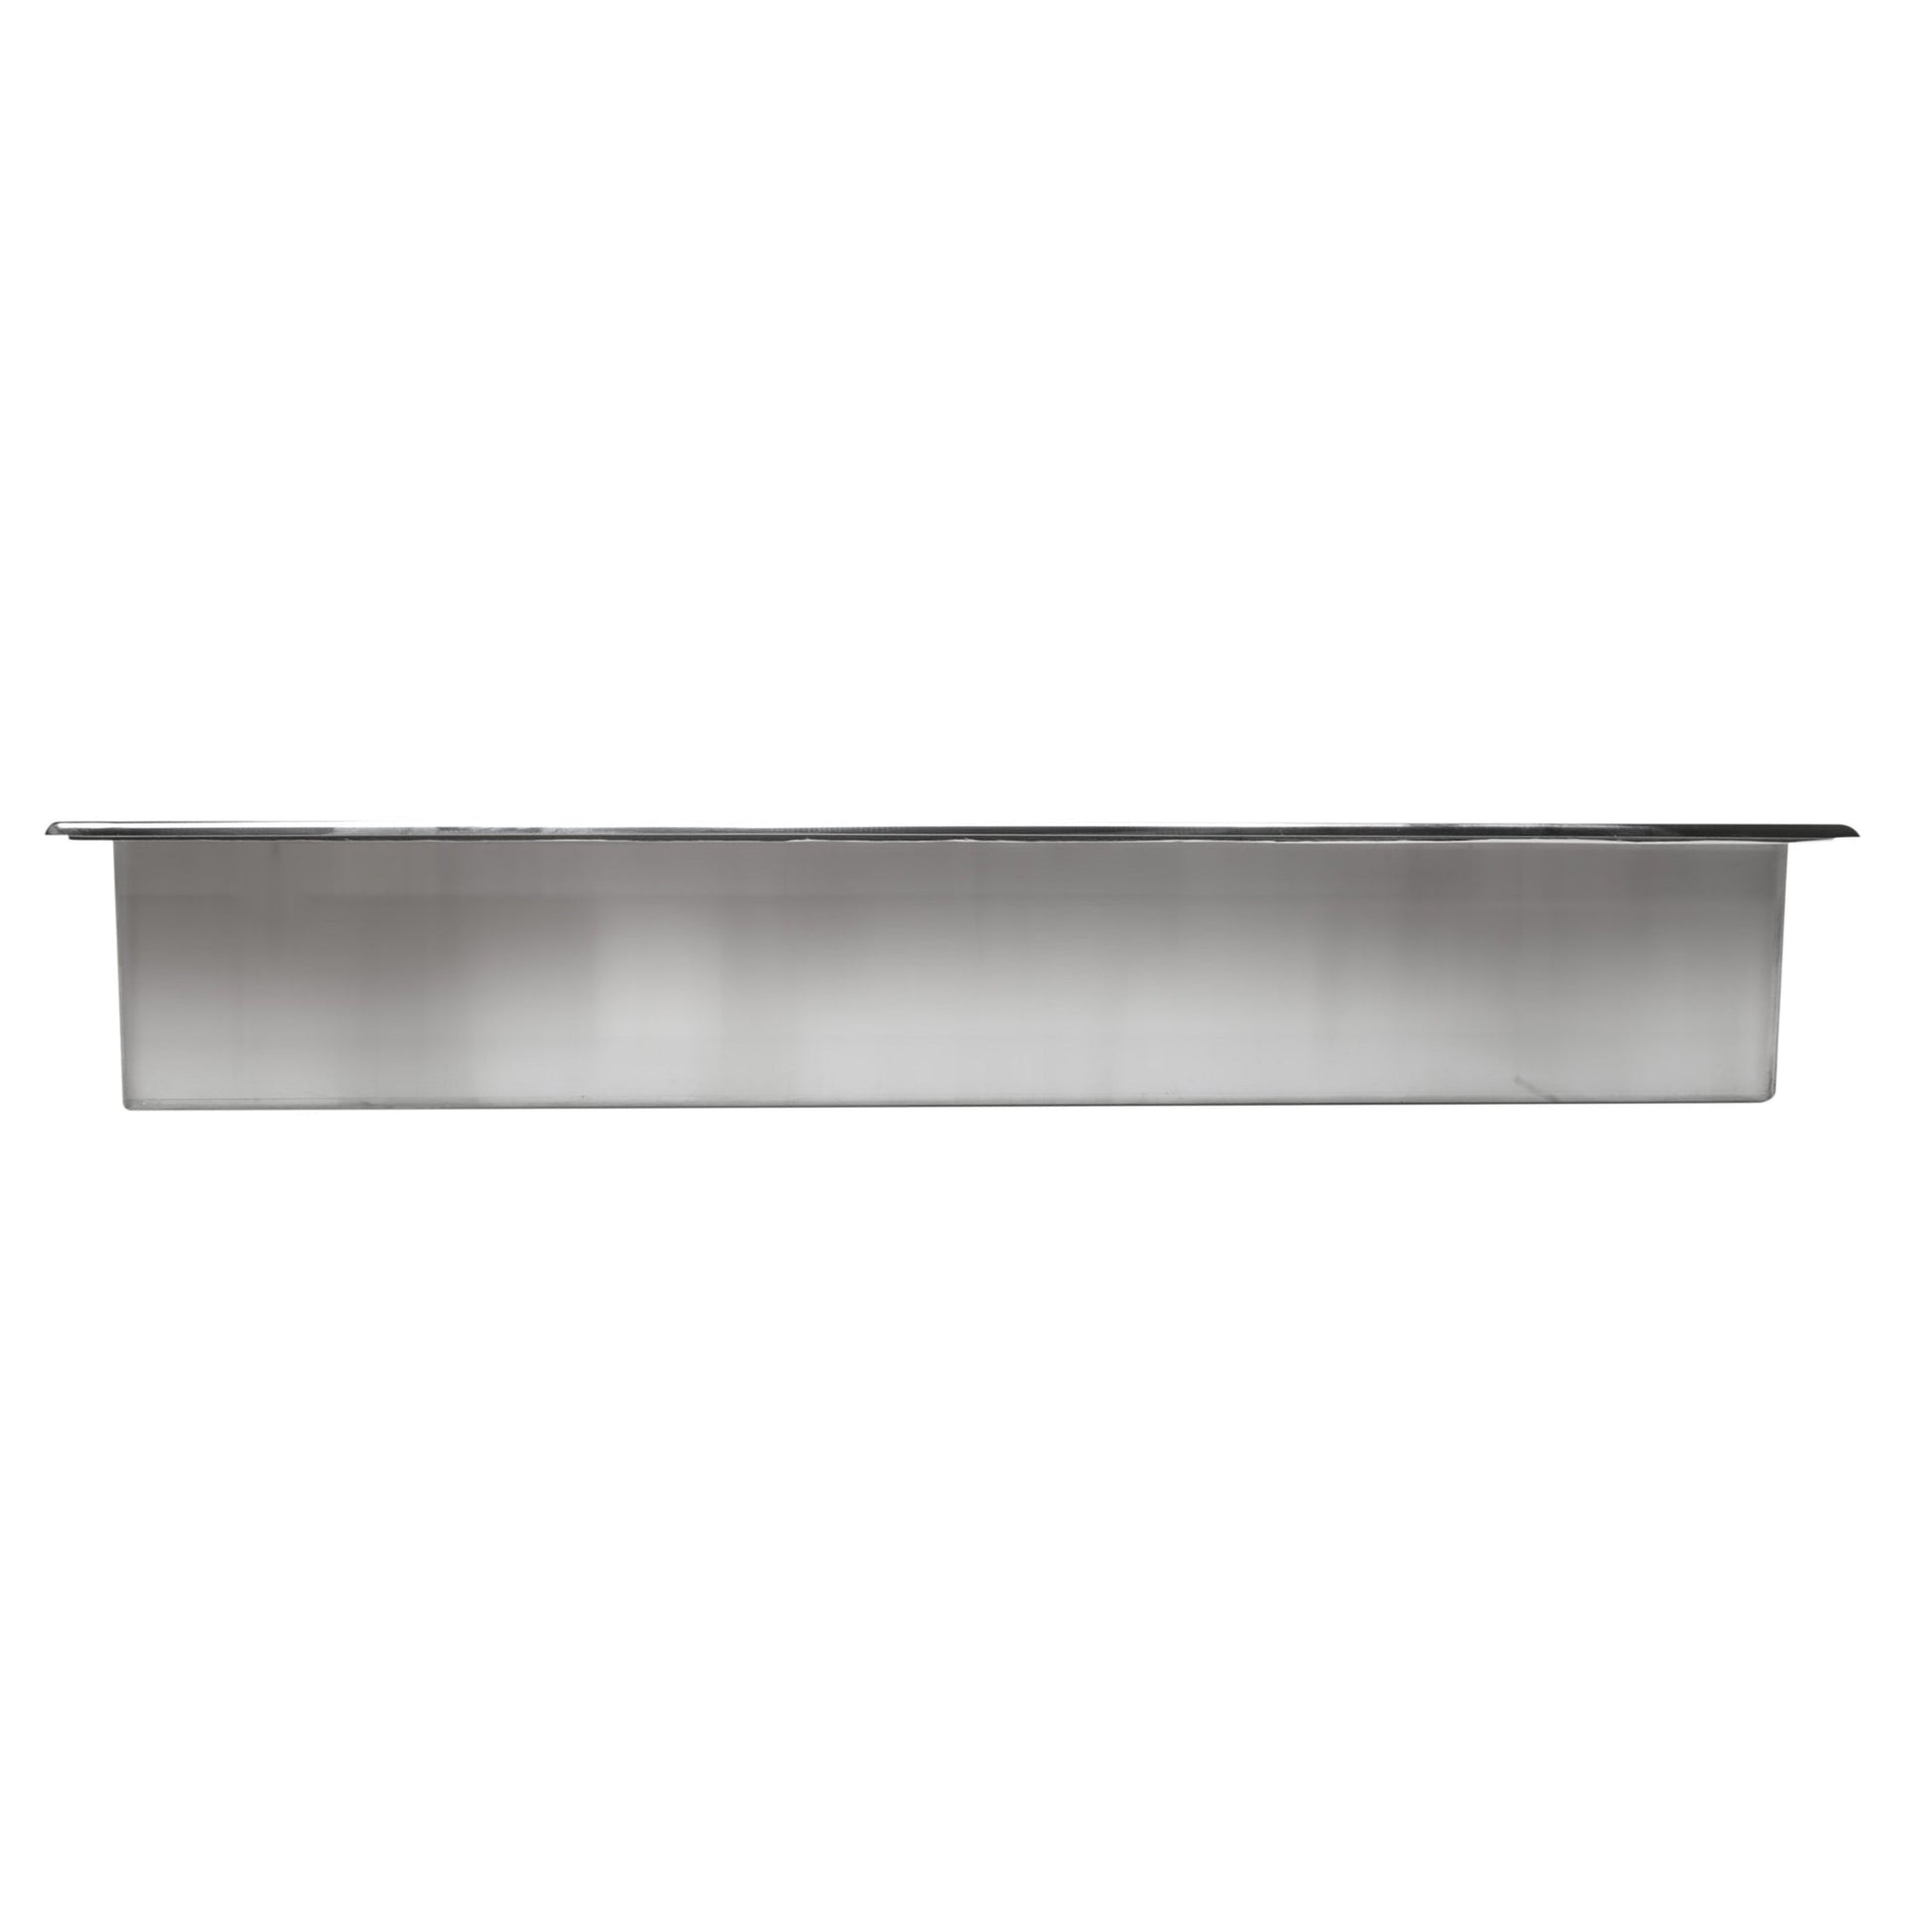 ALFI brand 24 x 12 White Matte Stainless Steel Horizontal Single